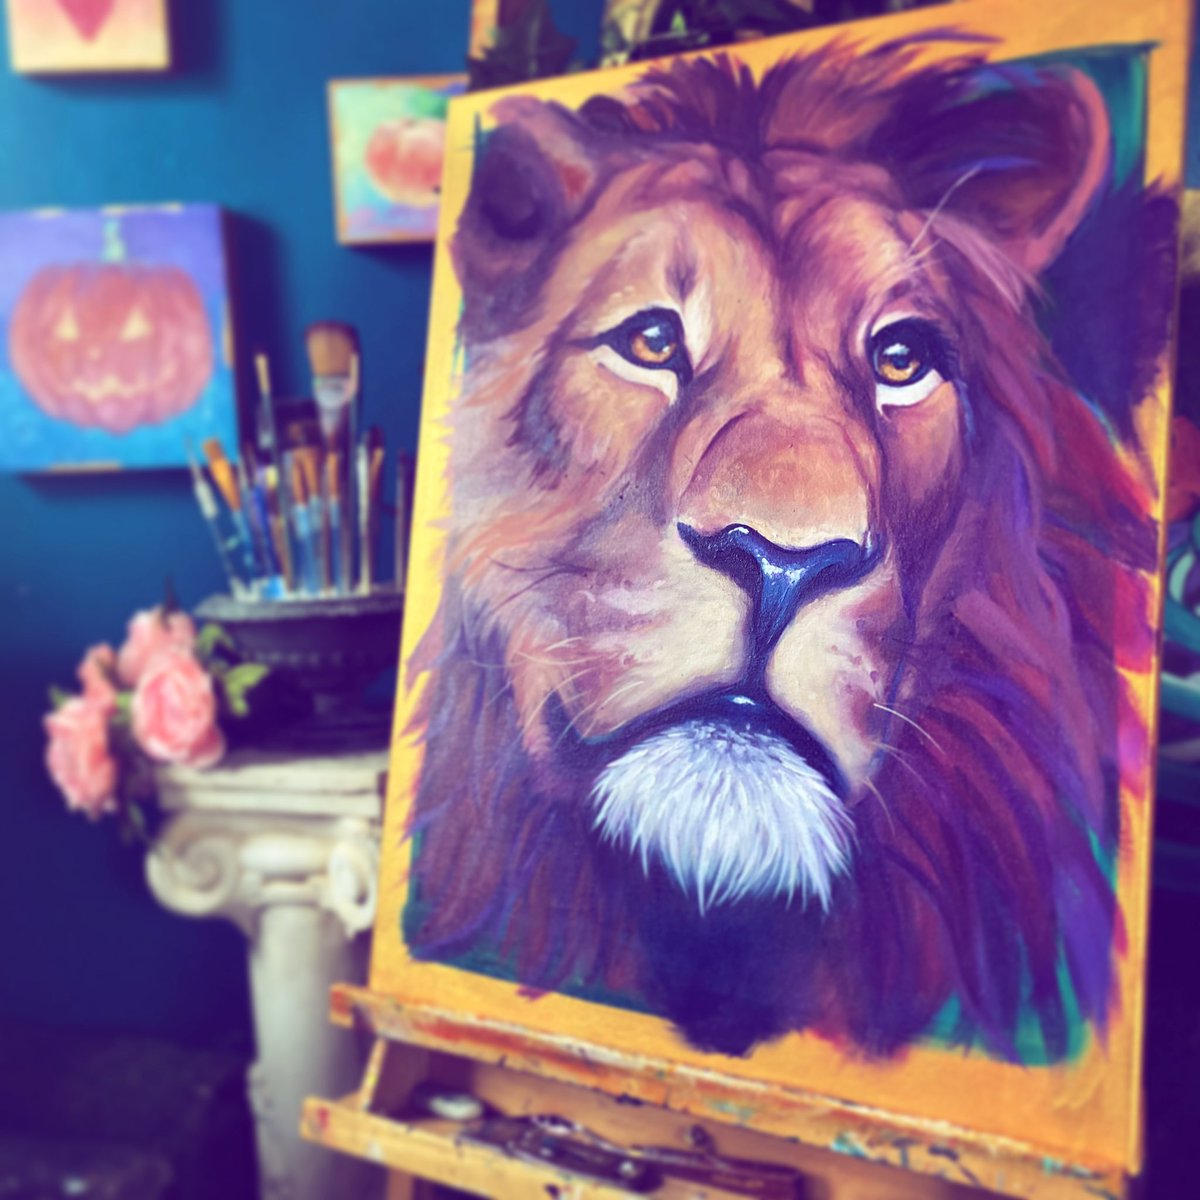 Rawr 🦁💜🦋✨
#art #artist #paint #painter #lion #lionpainting #jeweltones #maude #commission #oilpaint #artwork #artistsontwitter #ArtistOnTwitter